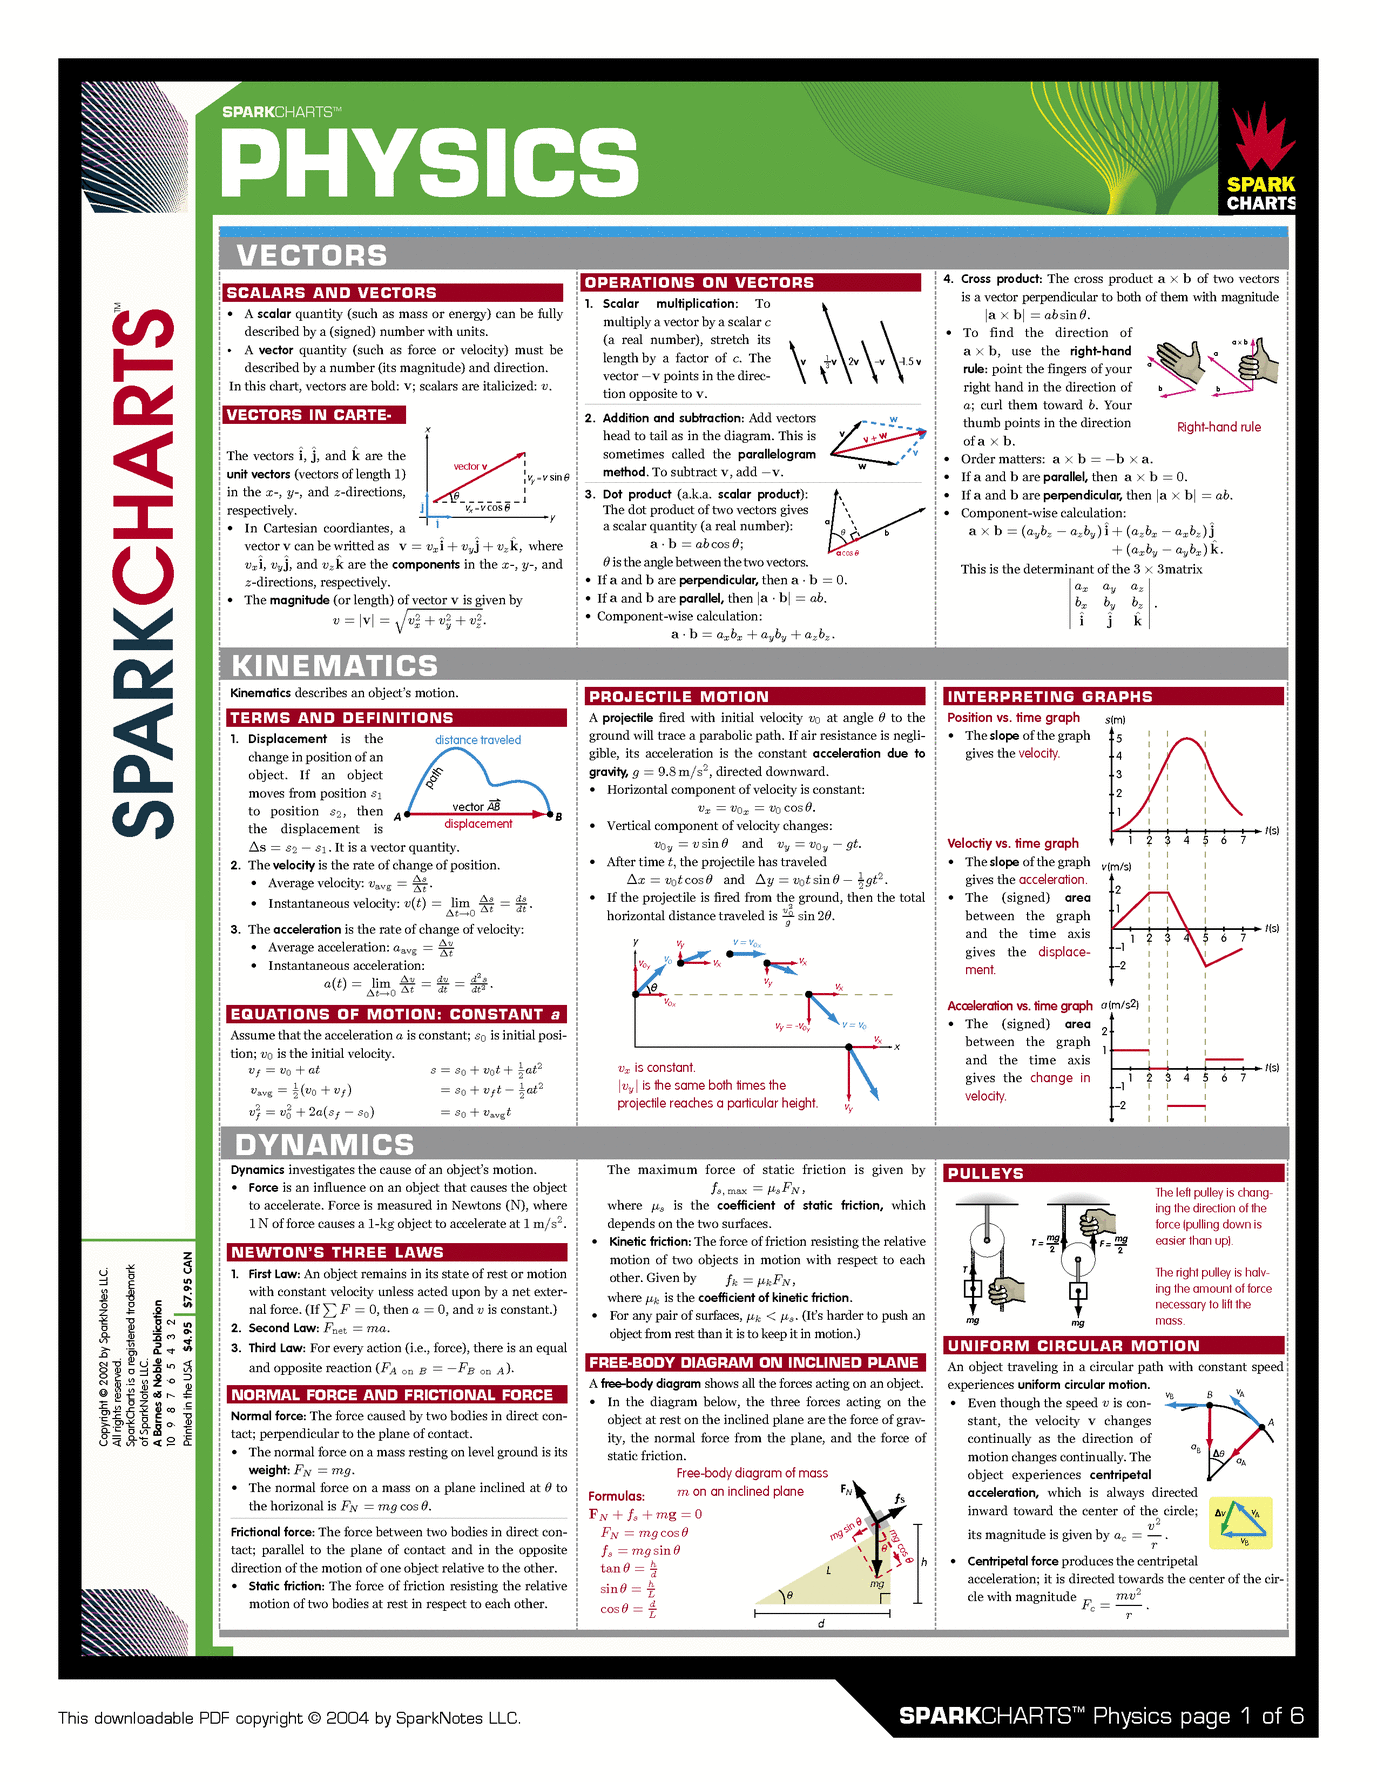 Physics Spark Chart